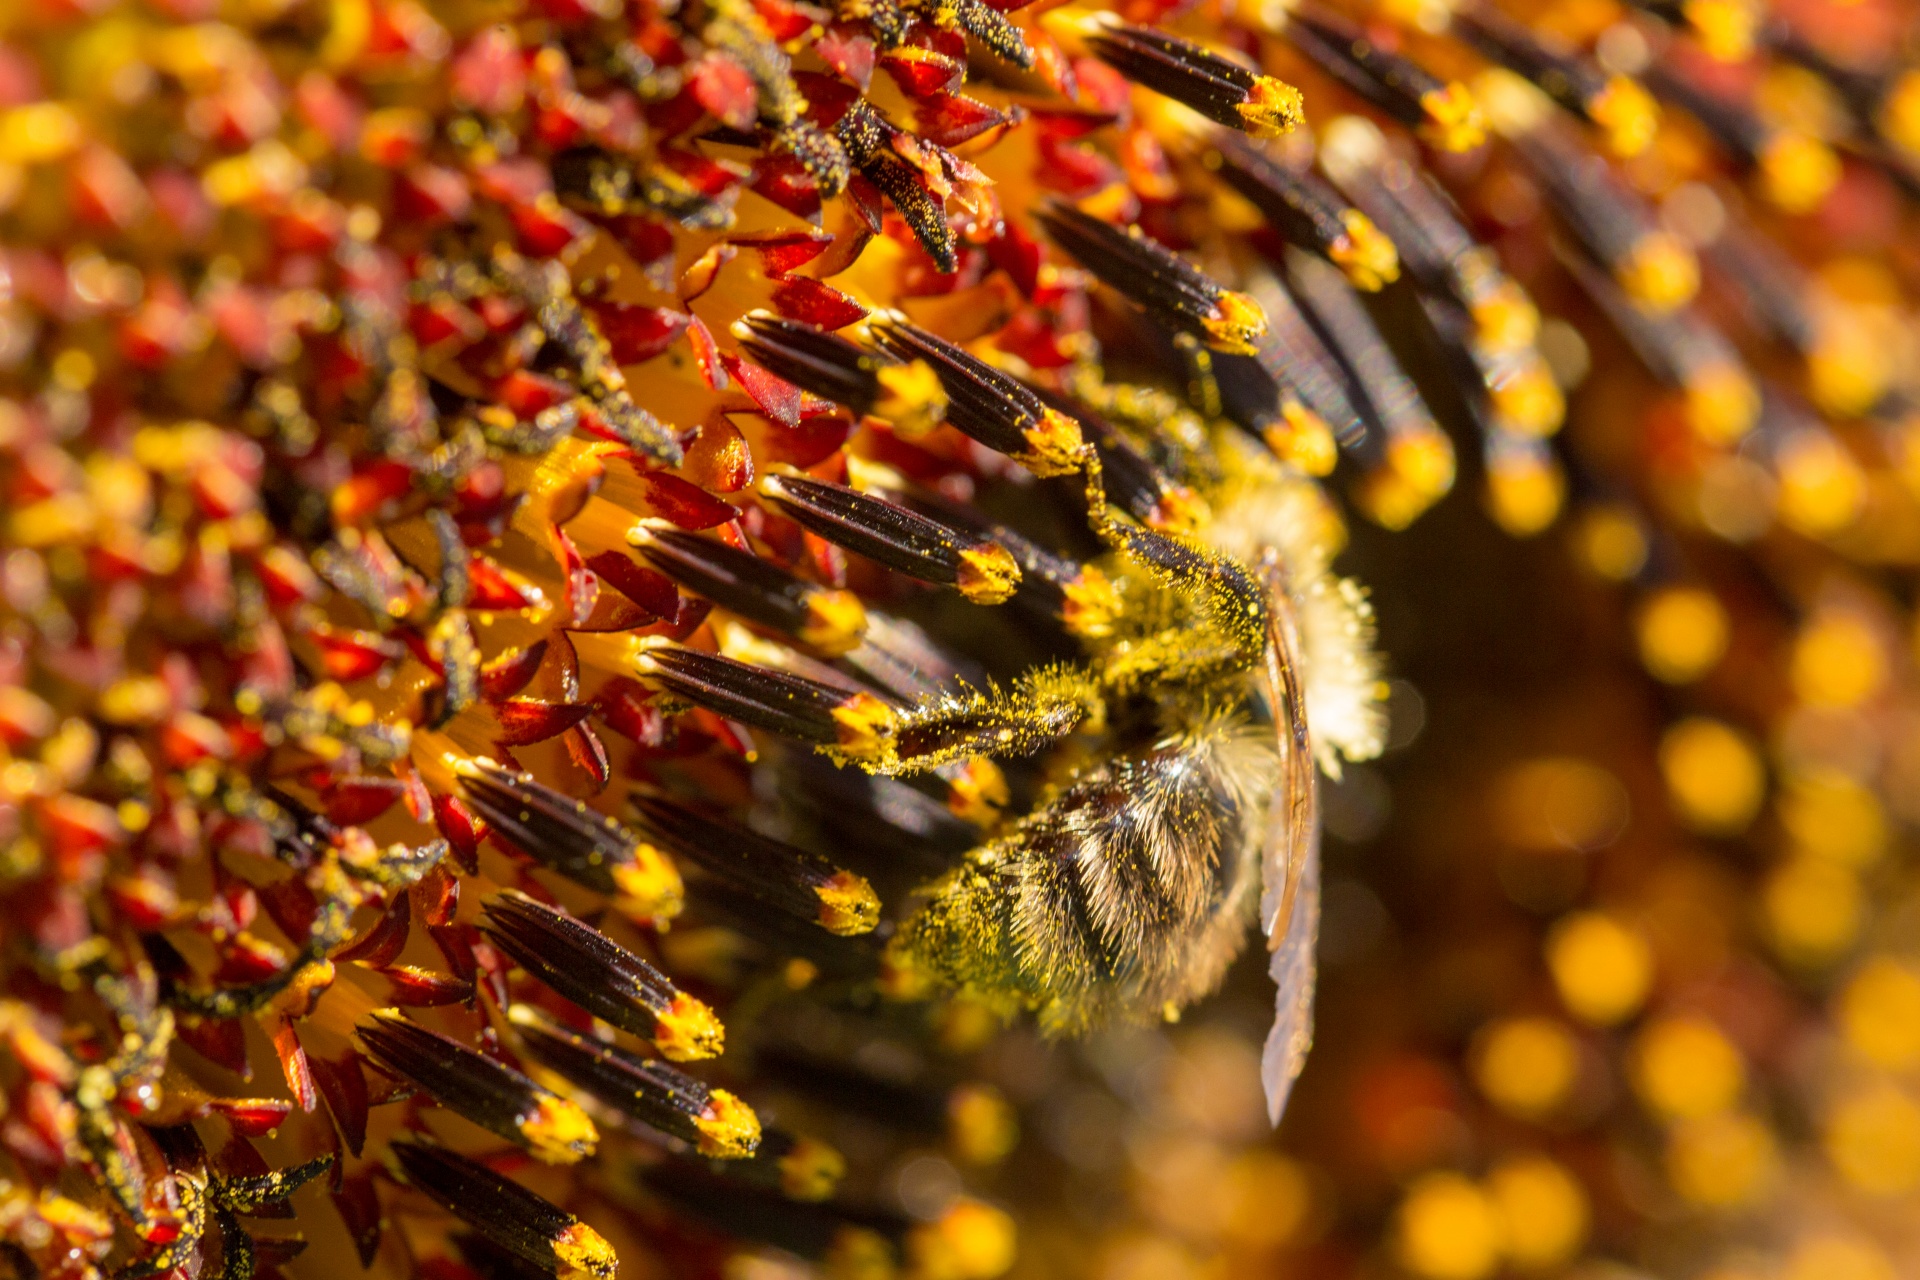 Bumblebee On A Sunflower